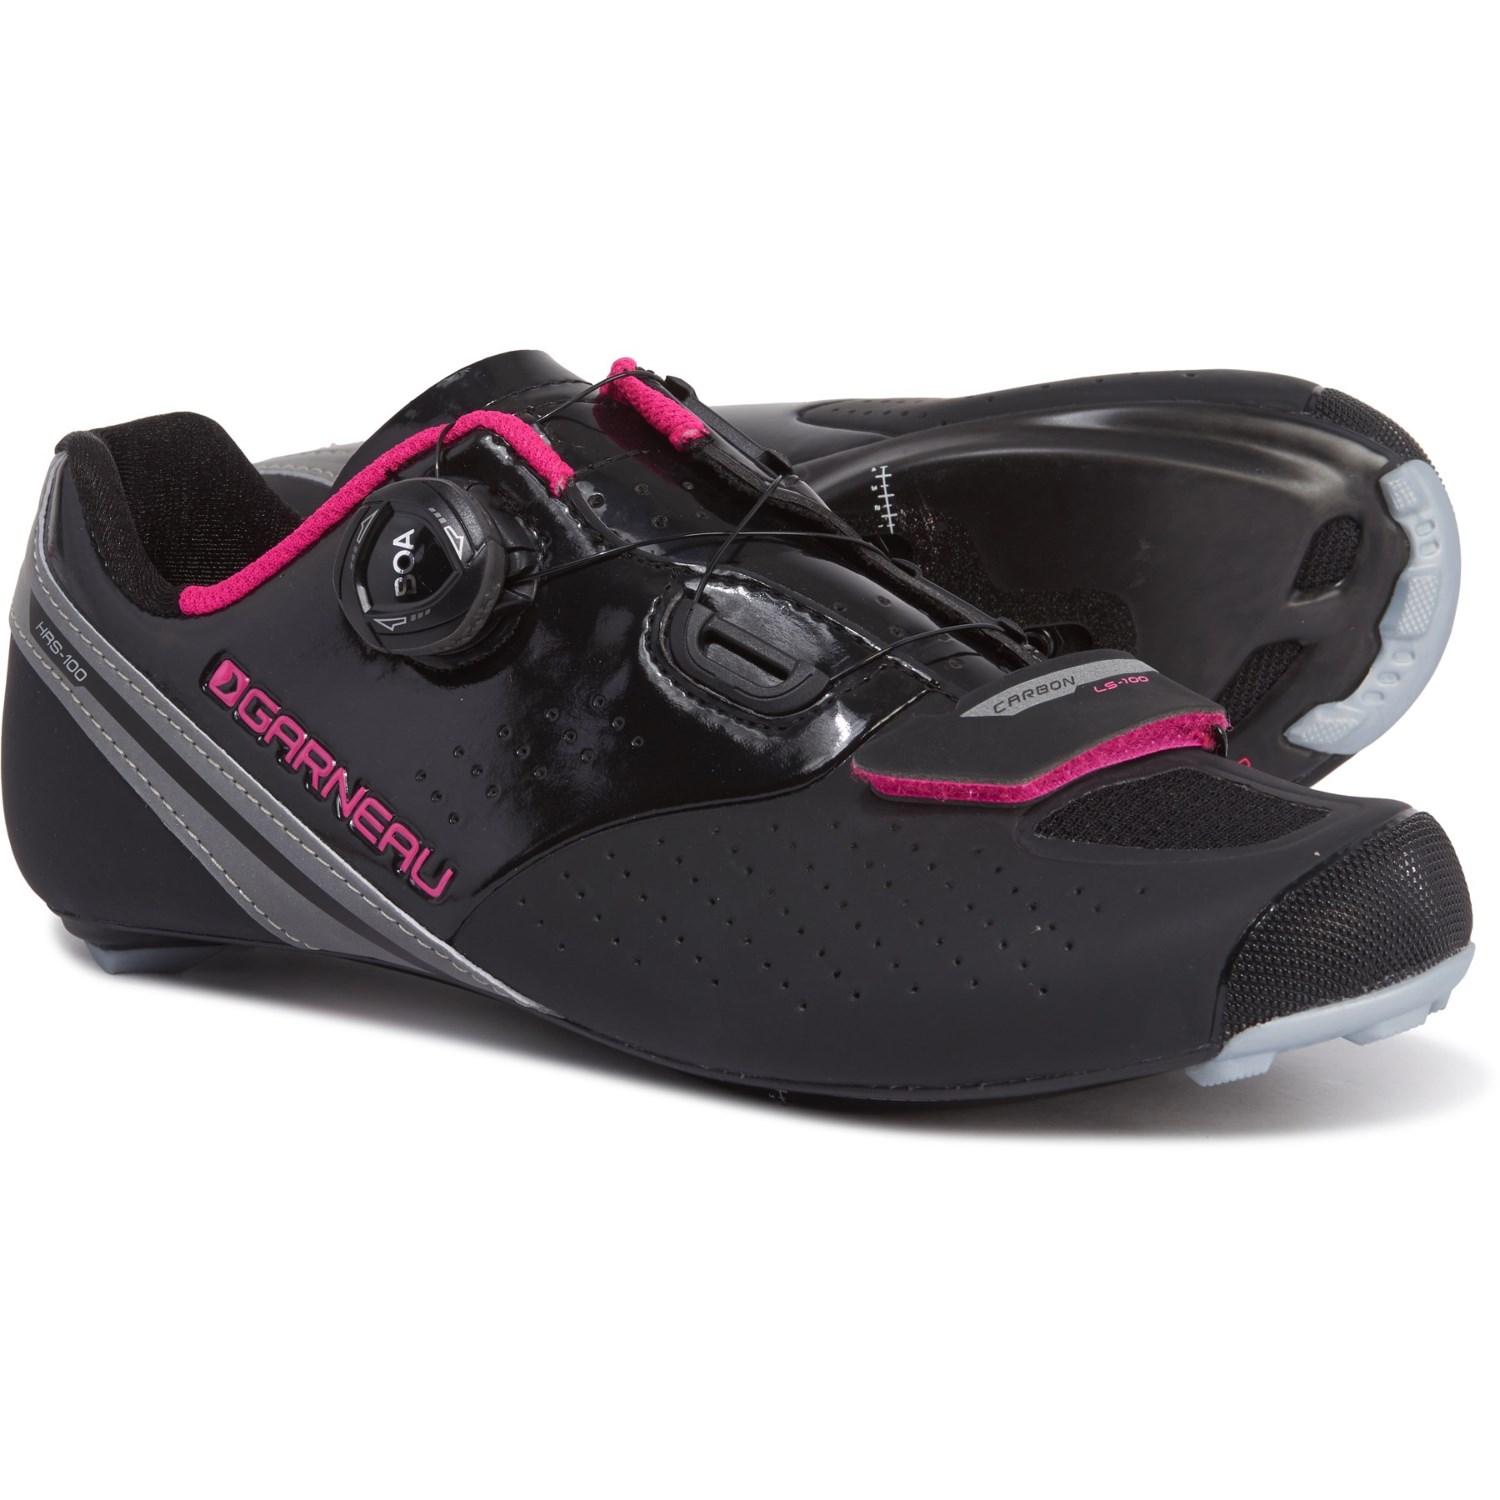 Louis Garneau Synthetic Carbon Ls-100 Ii Bike Shoes in Black/Pink (Black) - Save 36% - Lyst